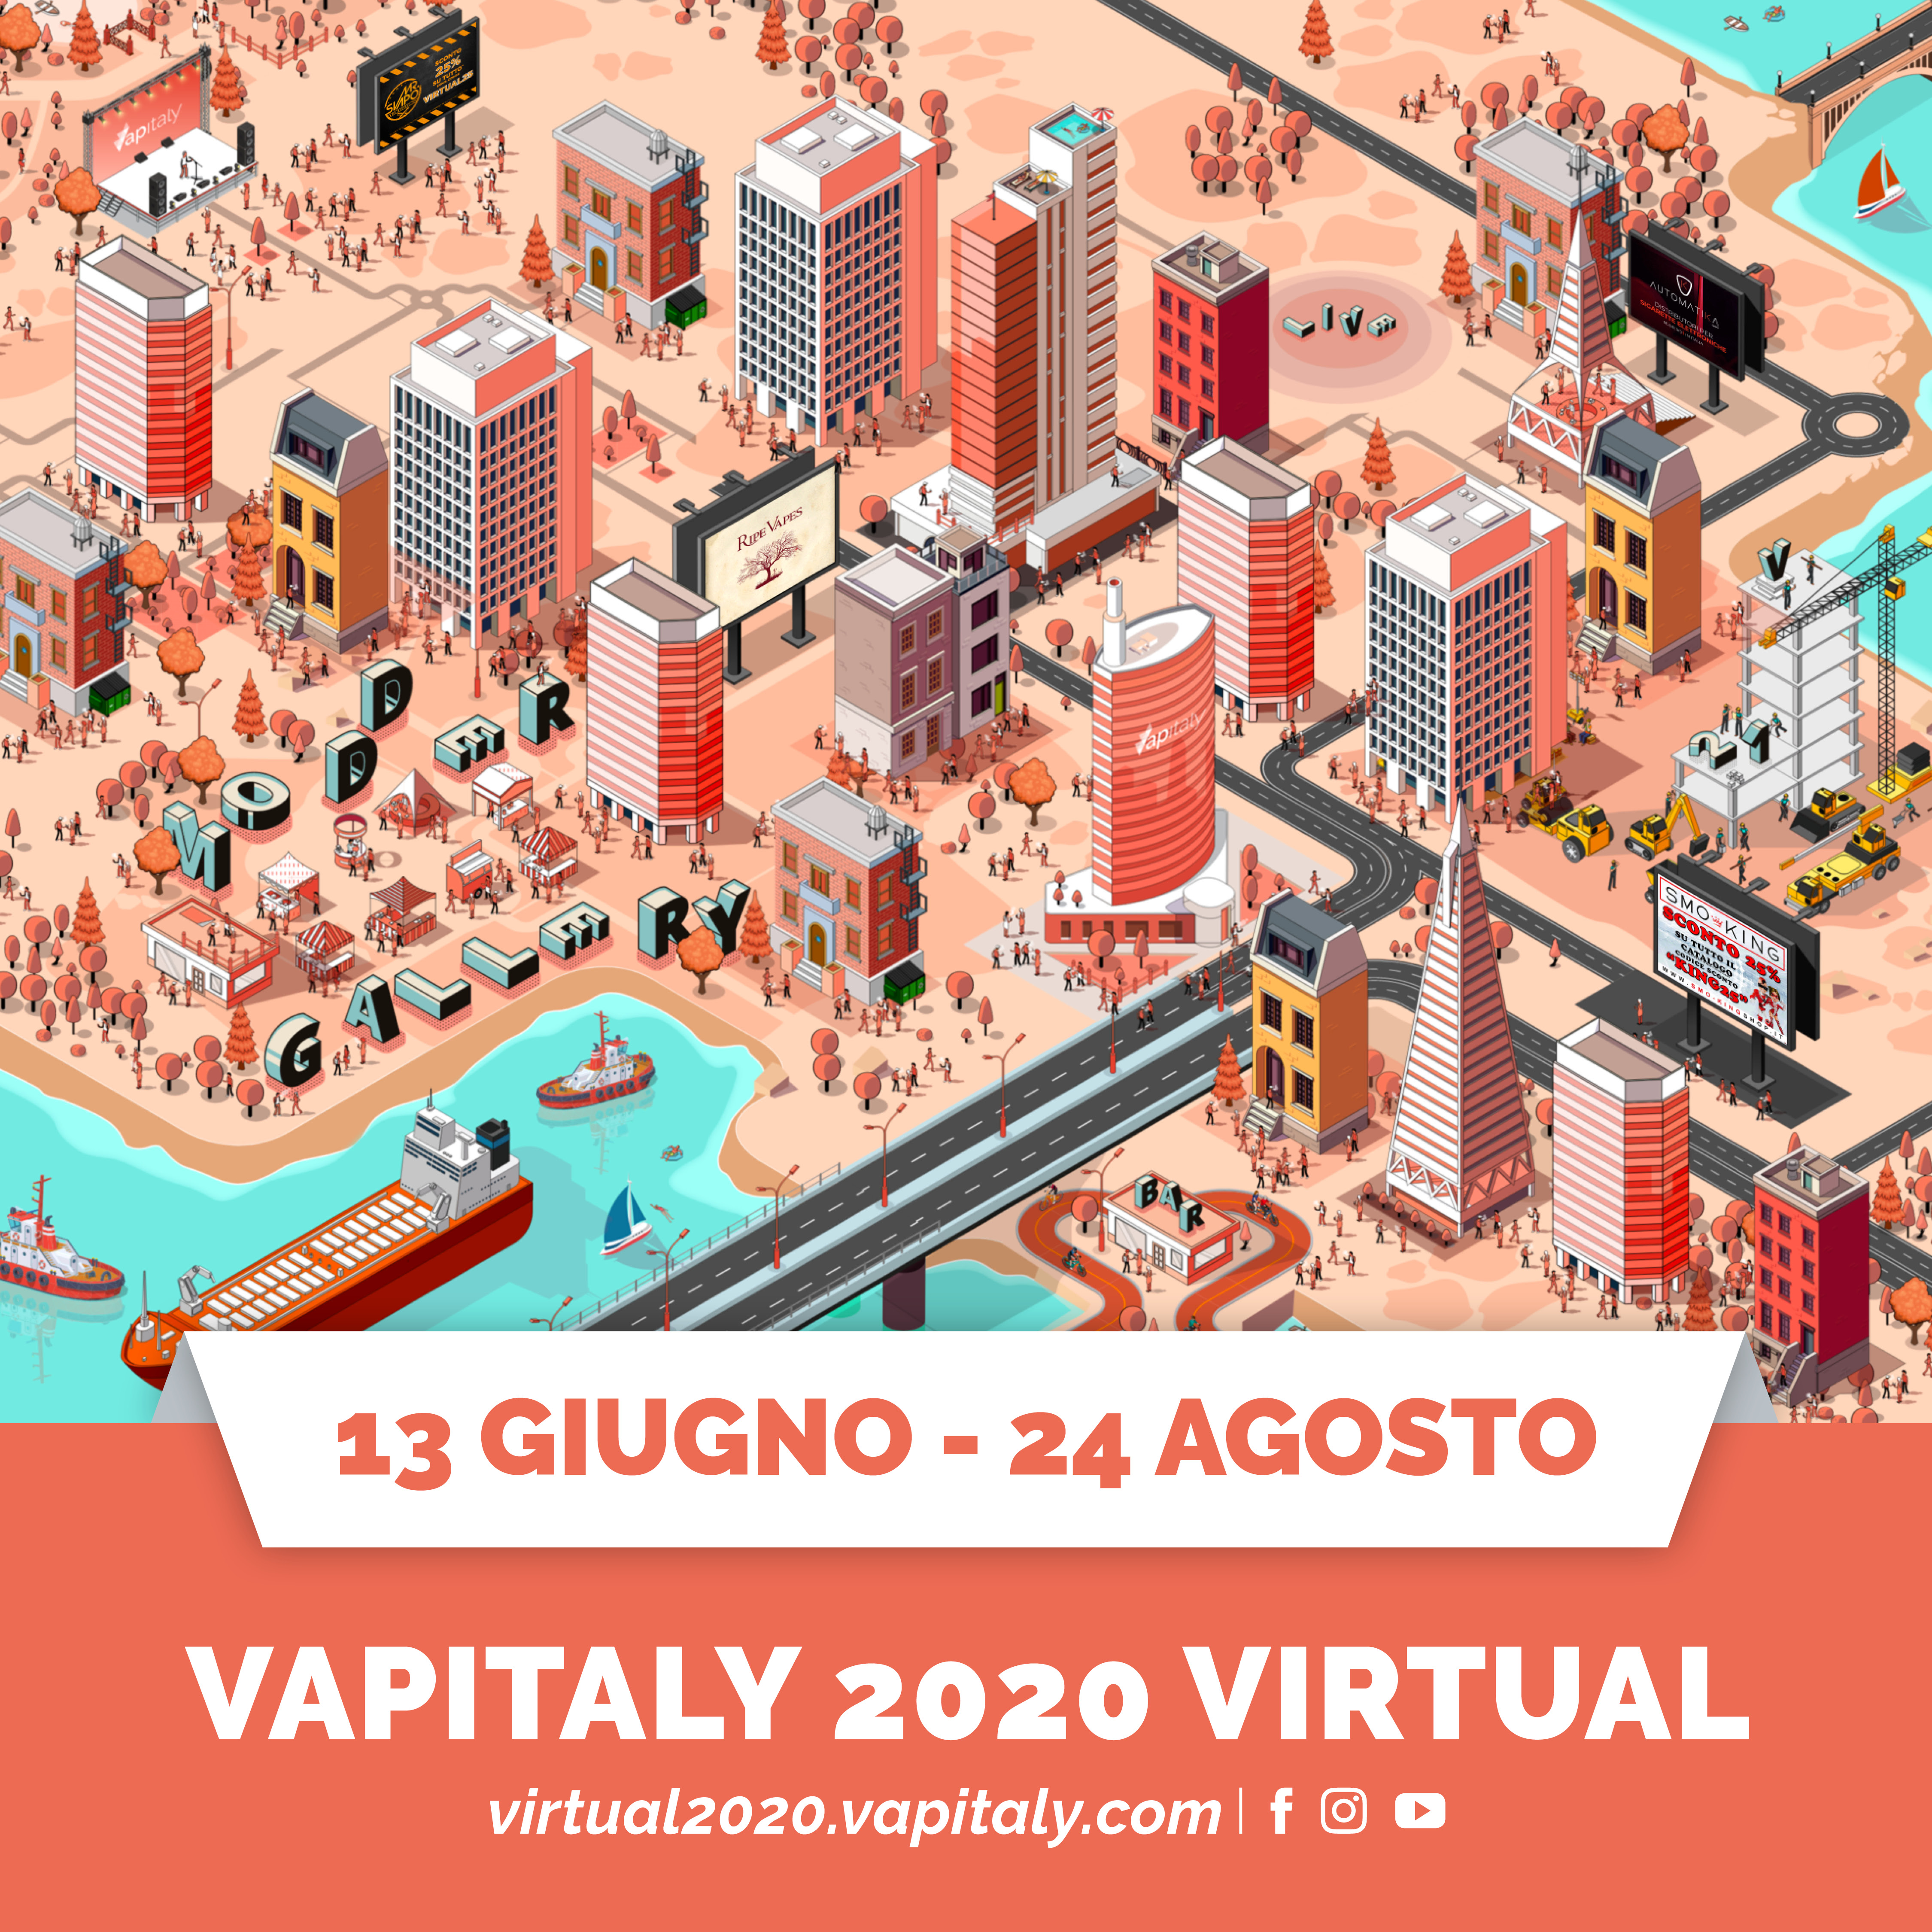 Vapitaly 2020 Virtual: online until August 24th